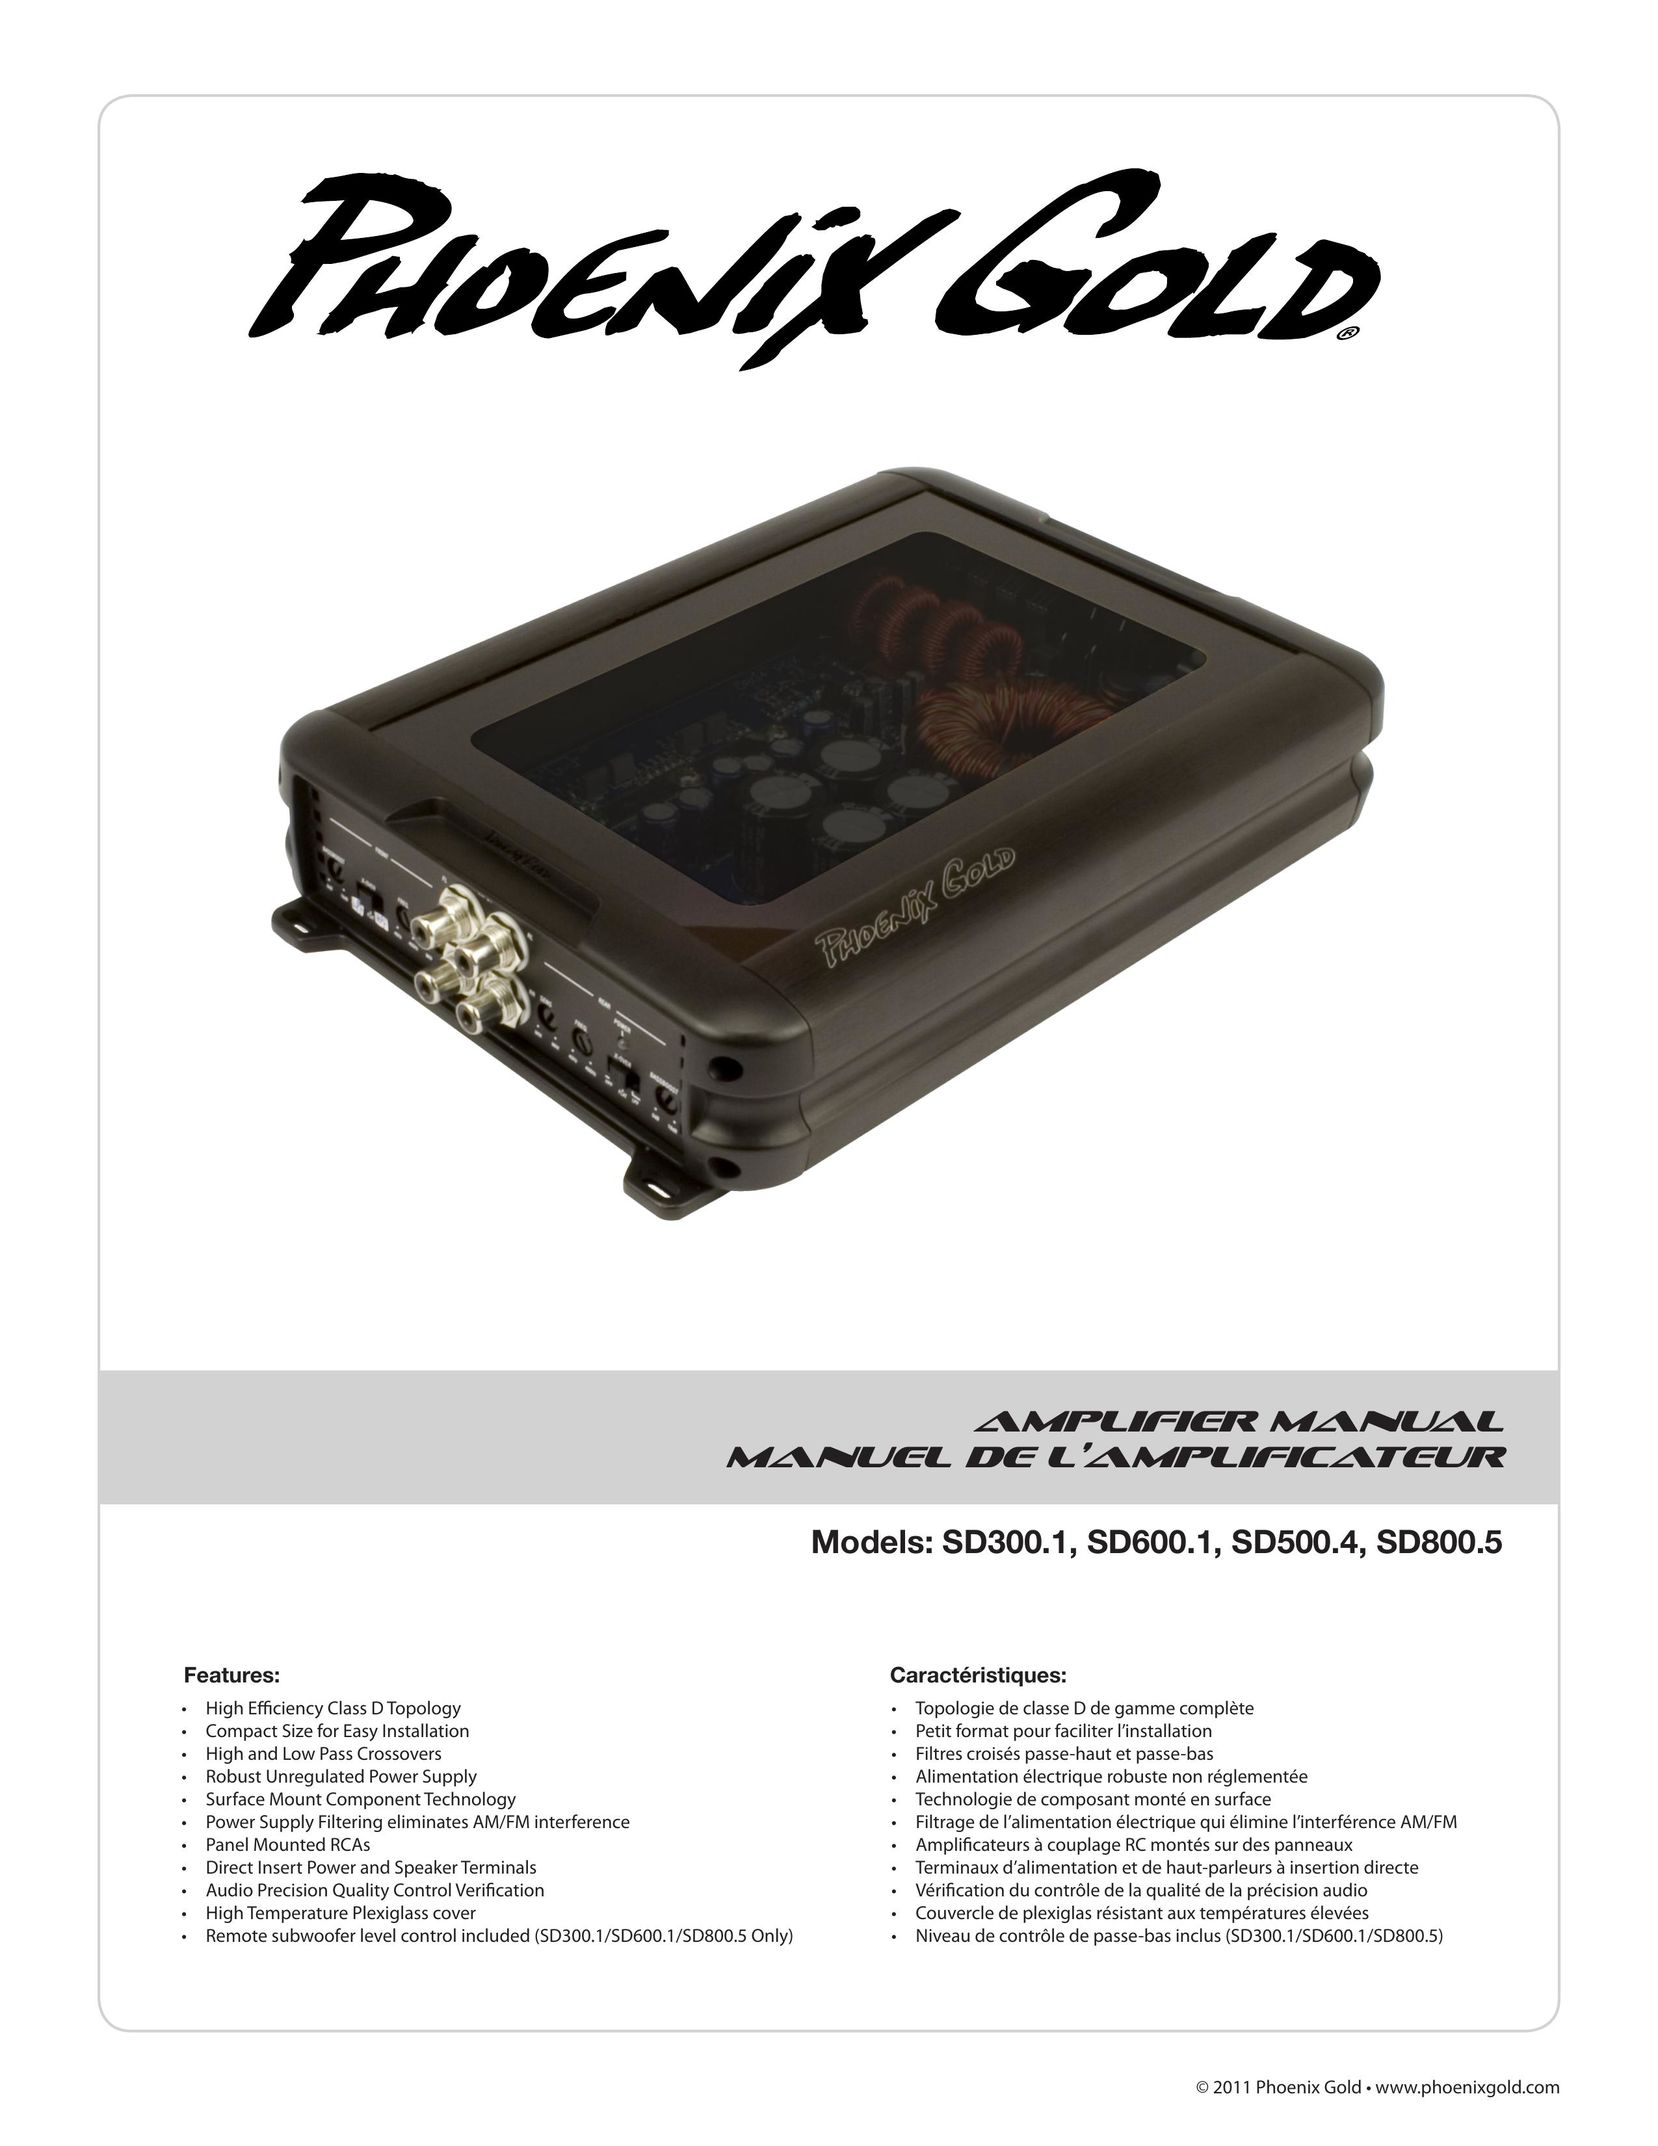 Phoenix Gold SD800.5 Car Amplifier User Manual